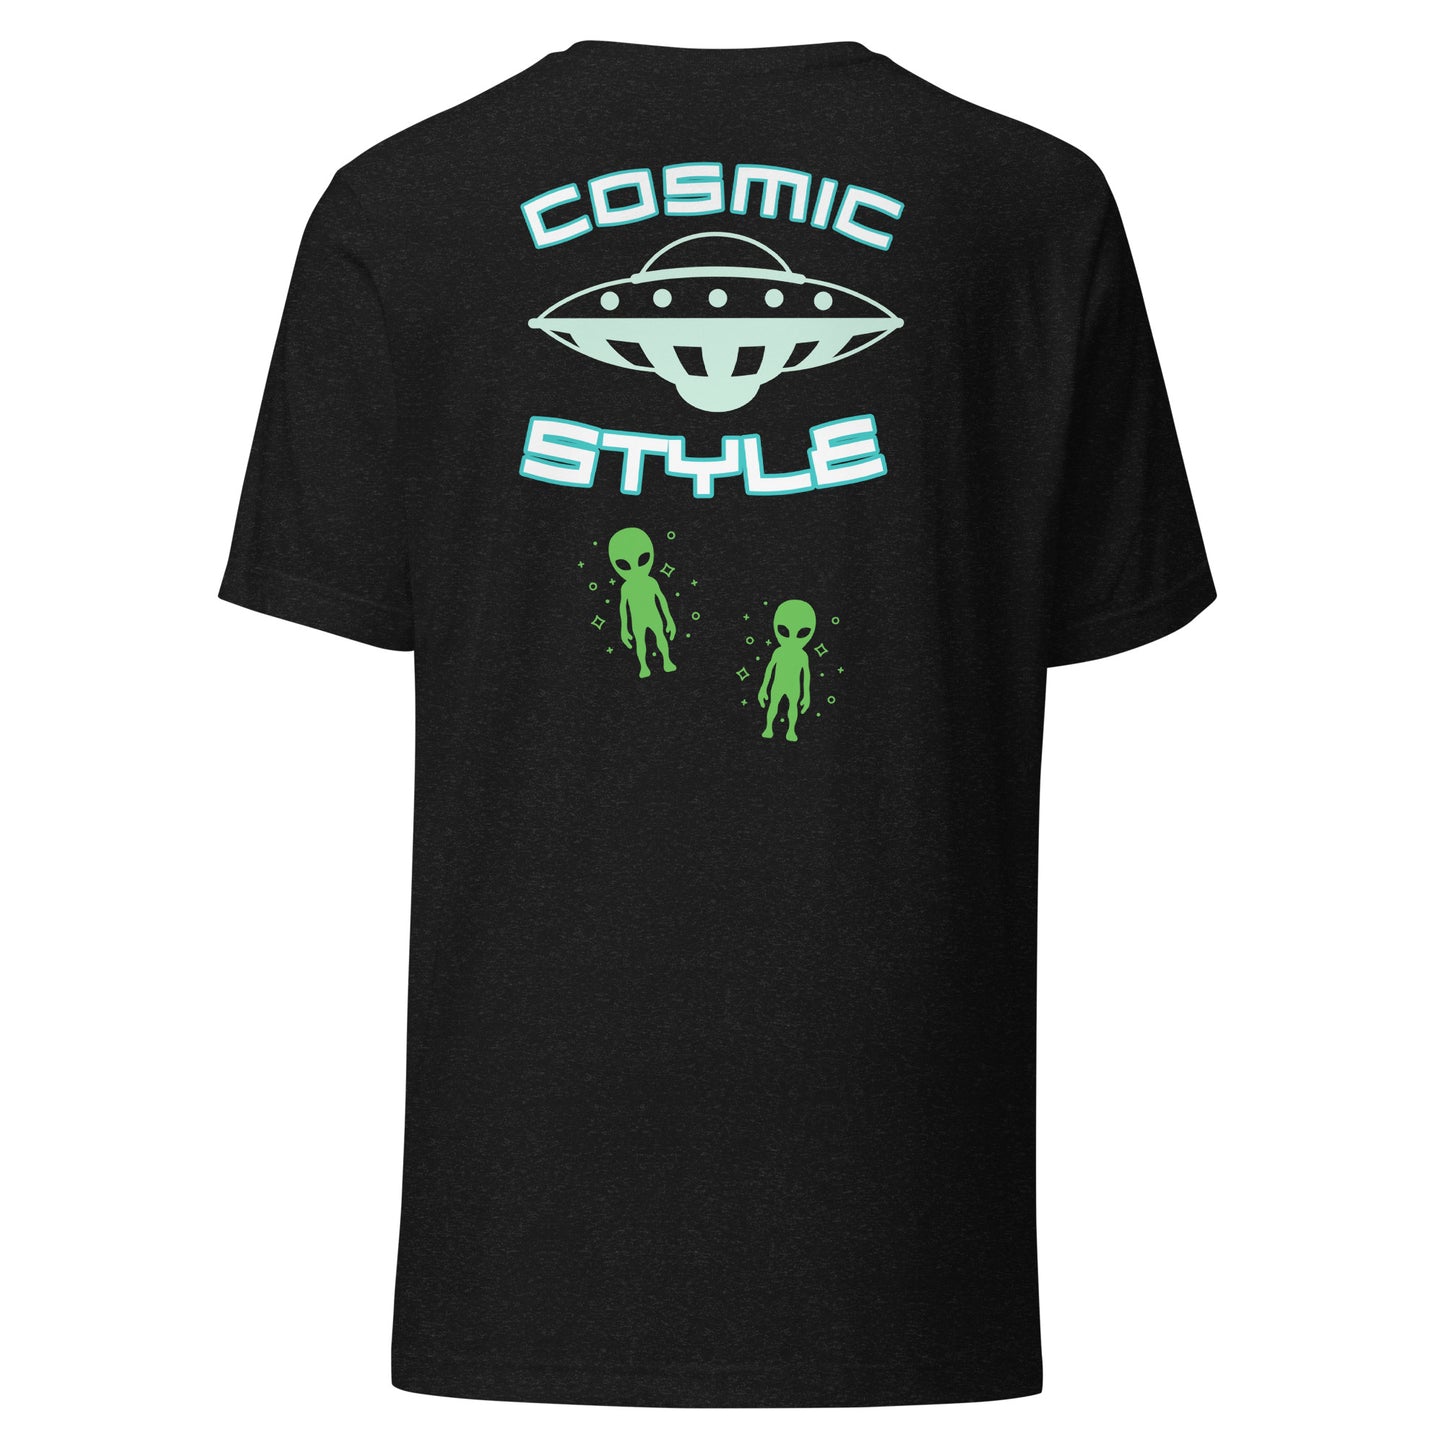 Cosmic Style t-shirt